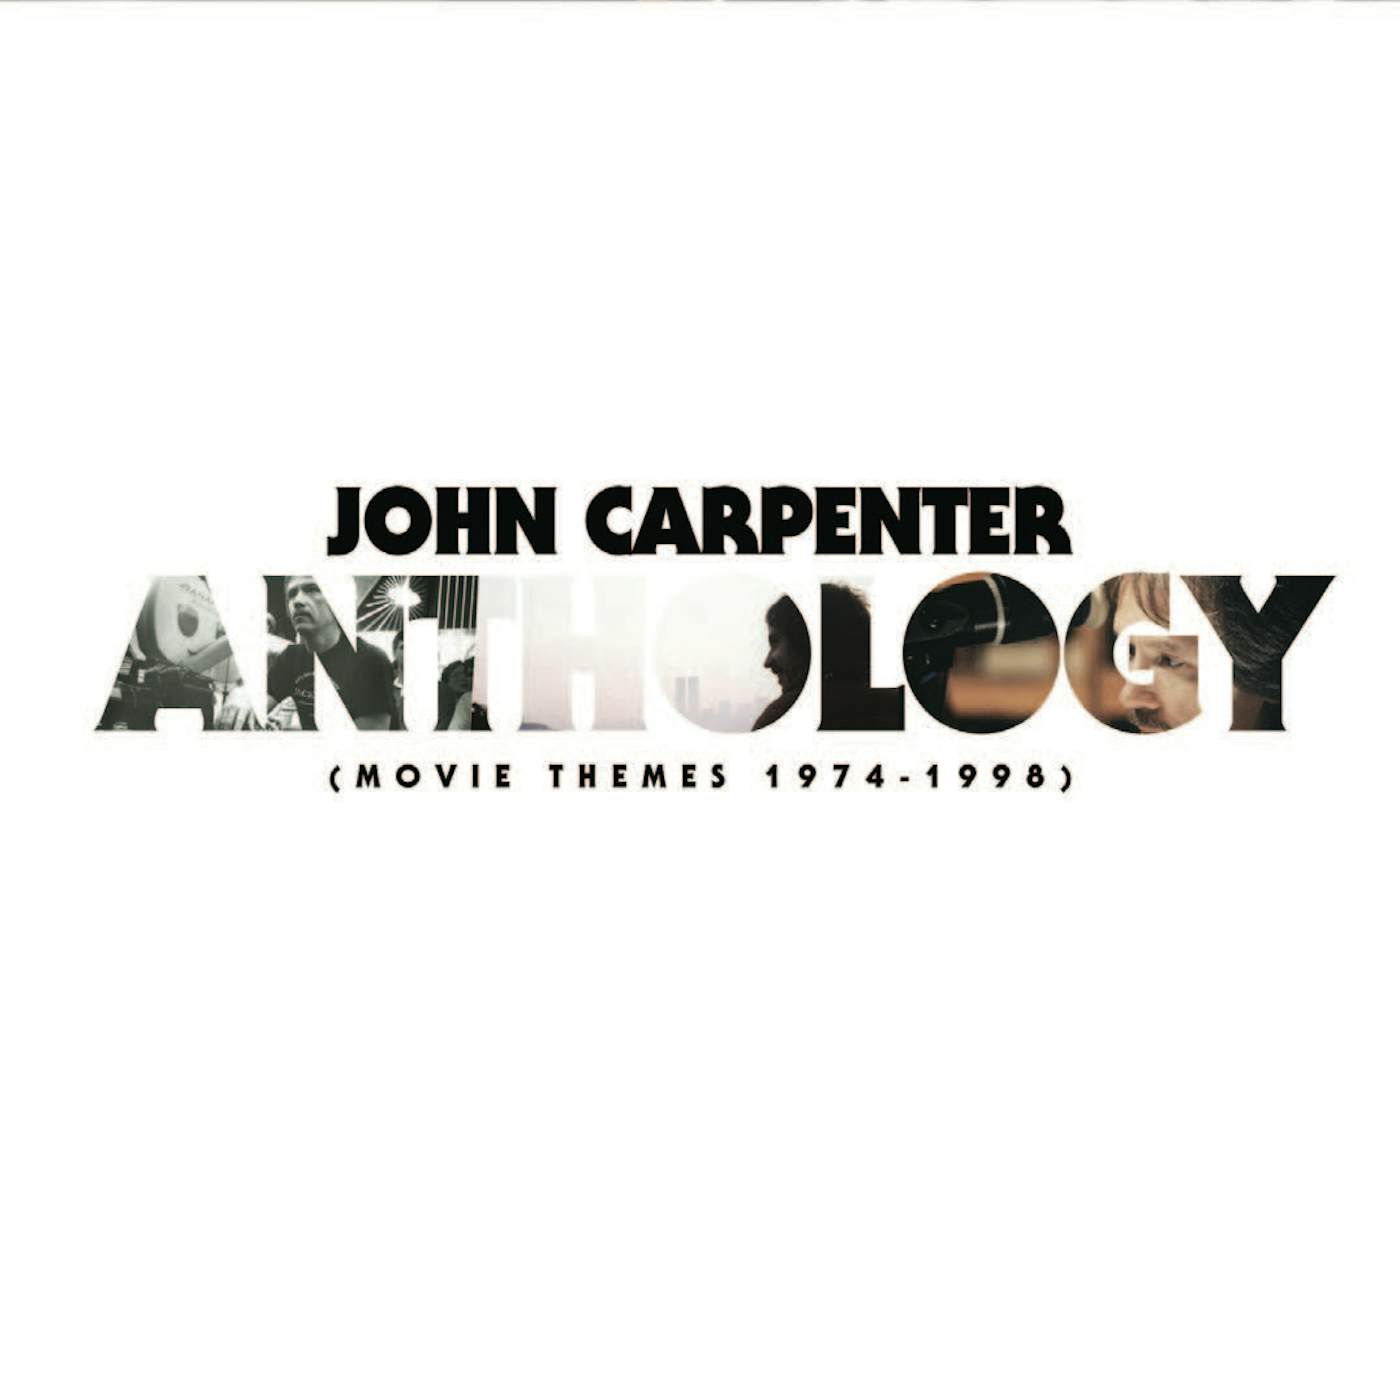 John Carpenter ANTHOLOGY: MOVIE THEMES 1974-1998 - Original Soundtrack CD